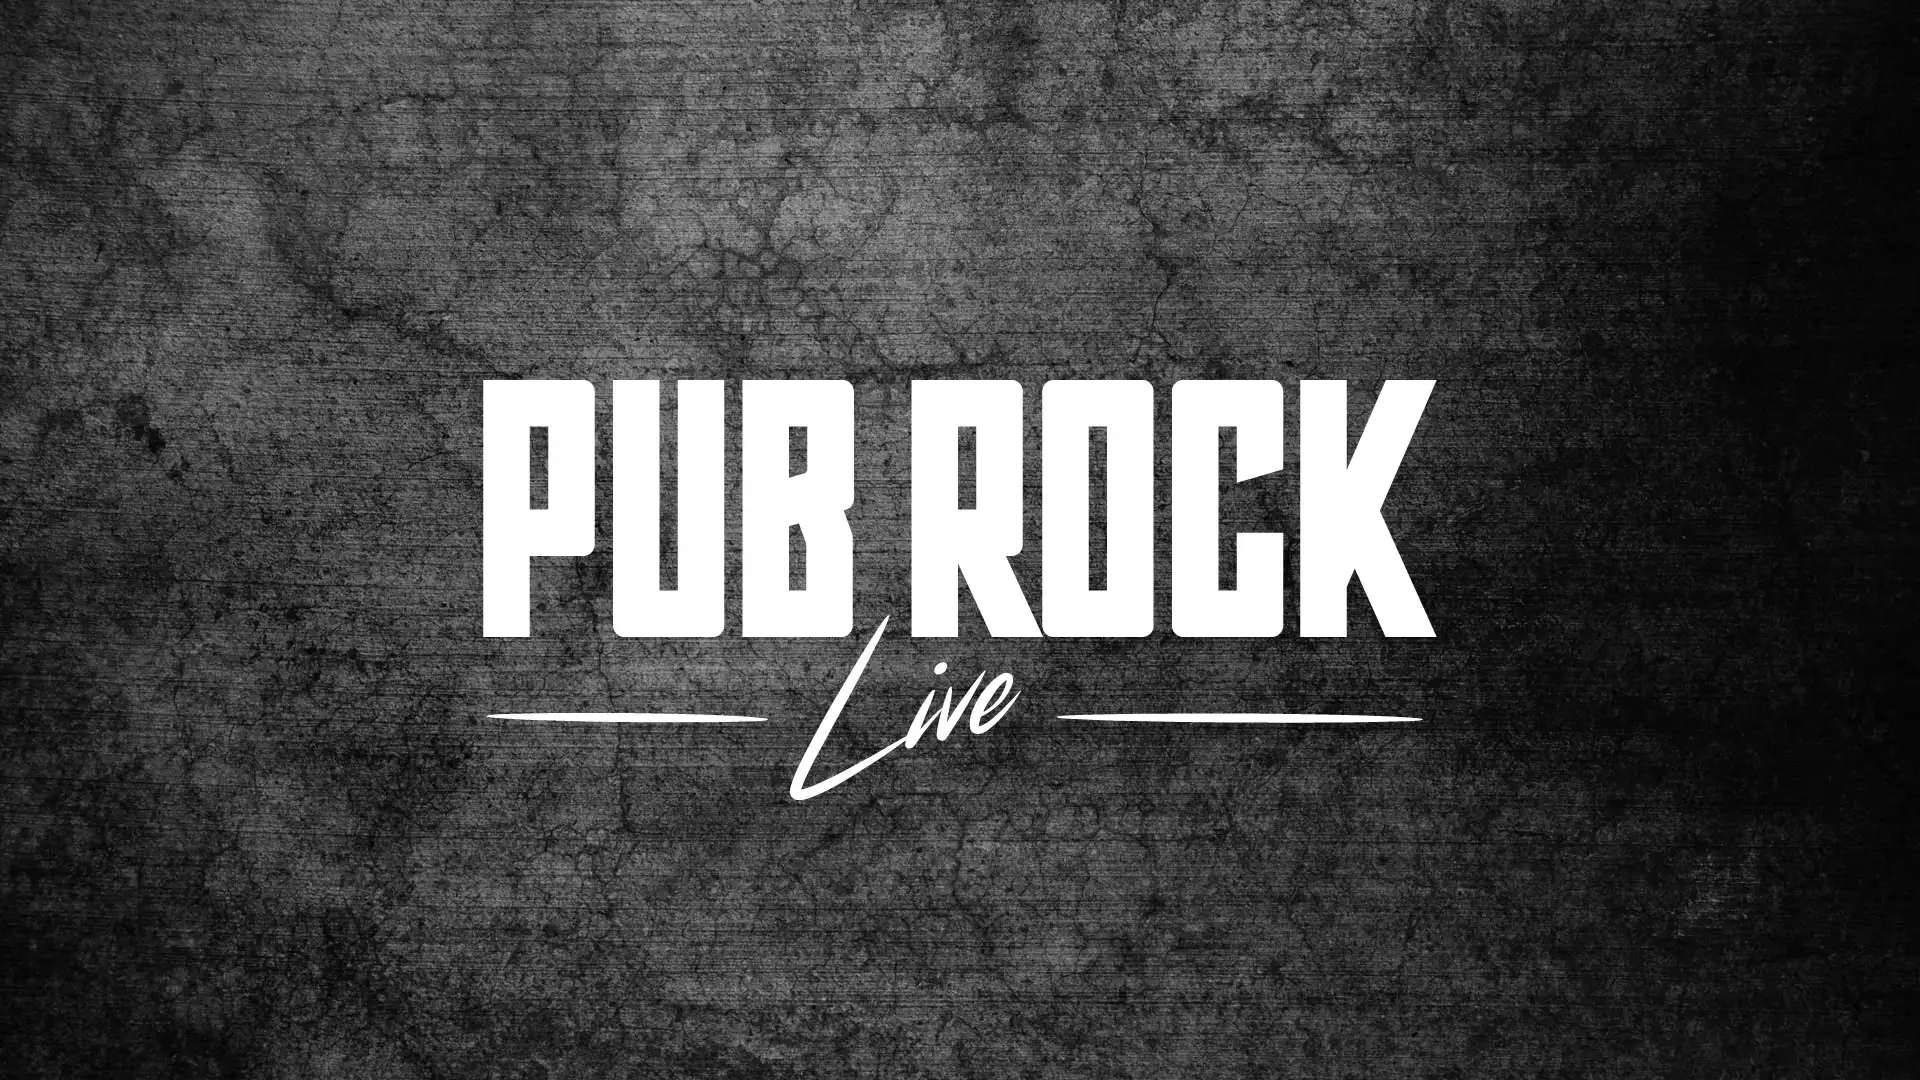 Pub Rock Live logo branding design by Dusty Drake